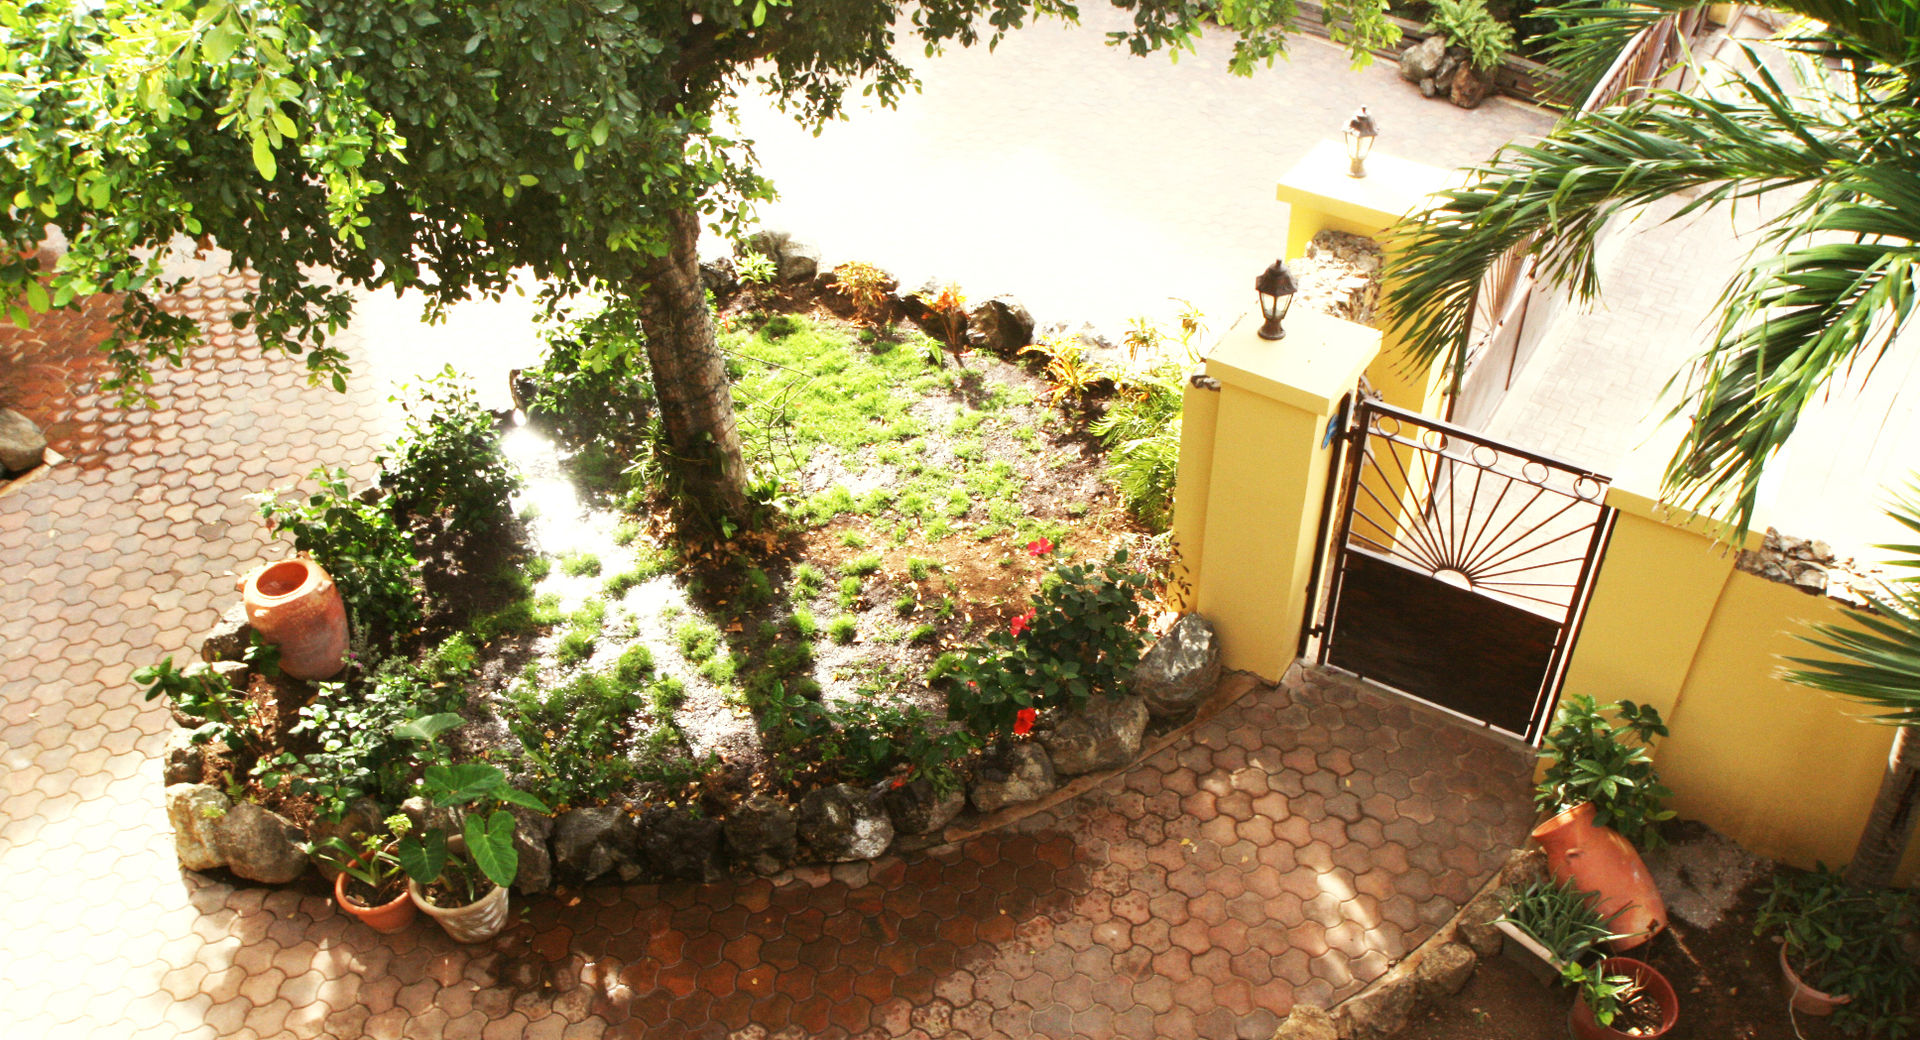 Casa Rokx, Willemstad Curaçao, architectenbureau Aerlant Cloin BNA architectenbureau Aerlant Cloin BNA Tropical style garden